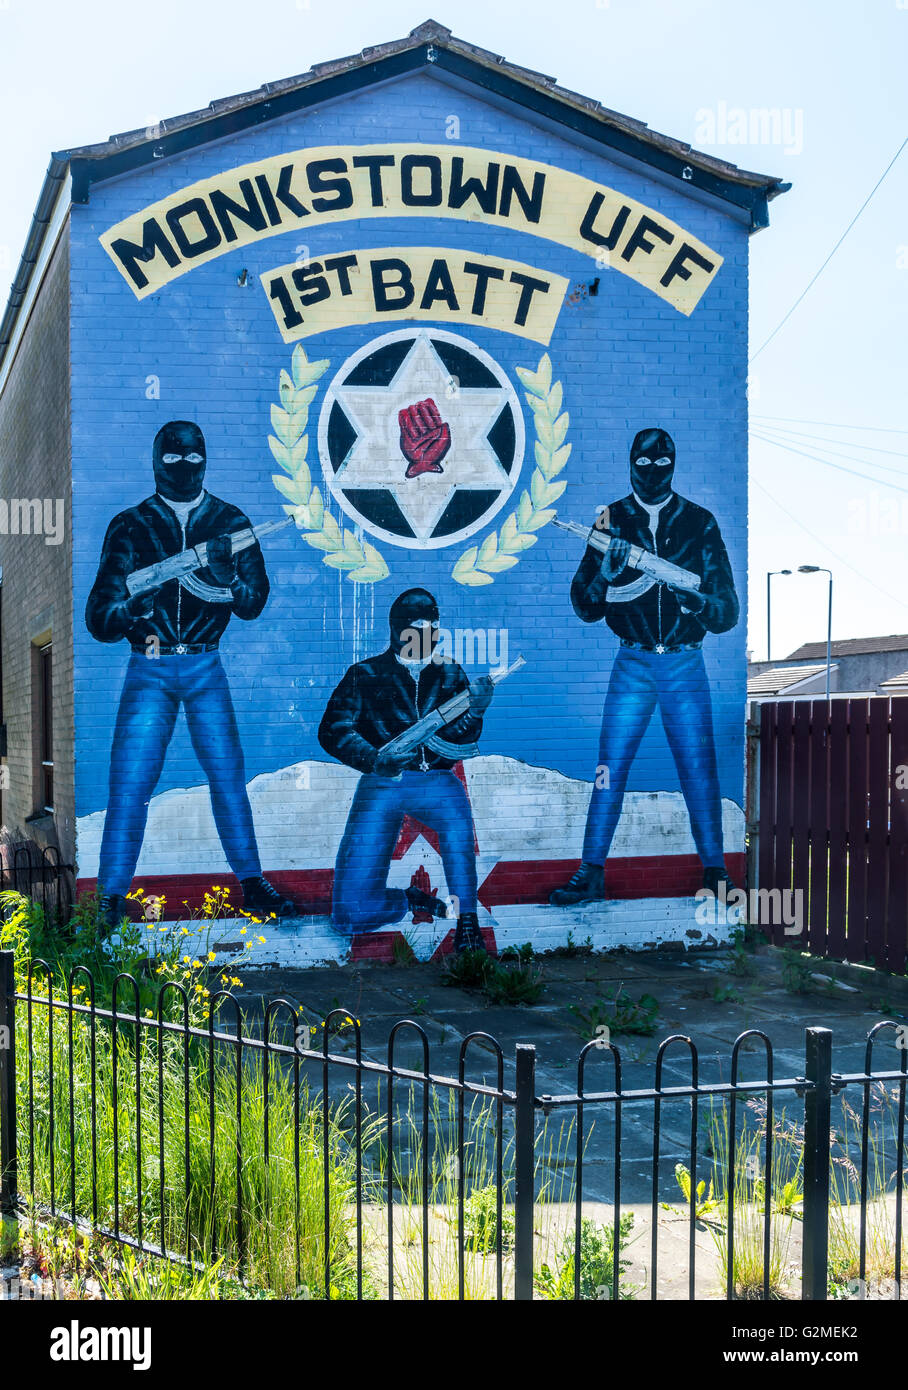 Monkstown 1st Batt loyalist mural depicting masked and armed gunmen from UFF UDA. Stock Photo